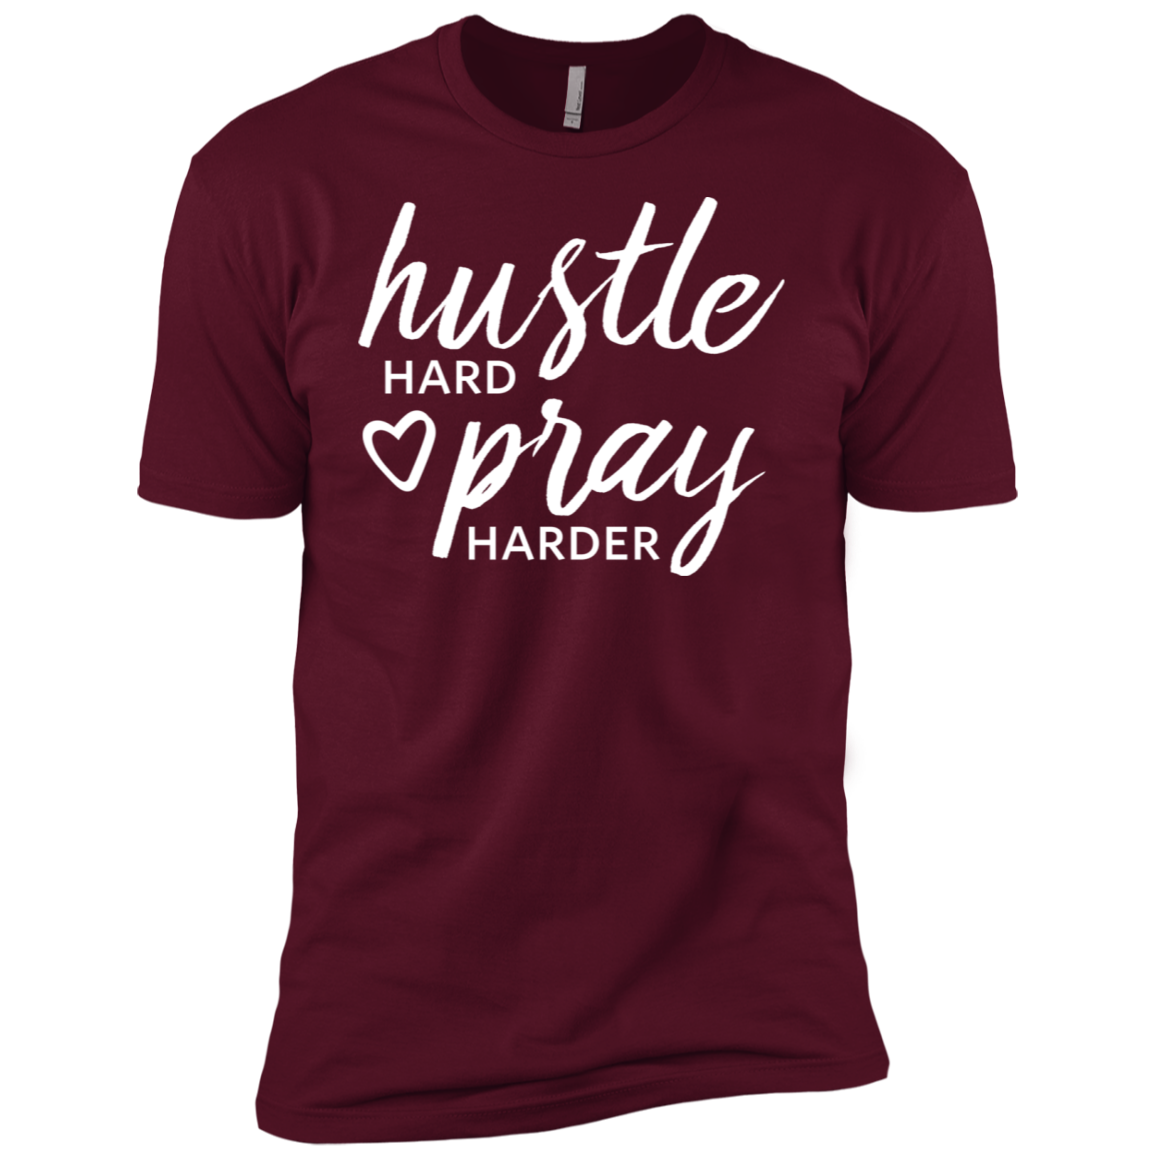 Hustle Hard Pray Harder